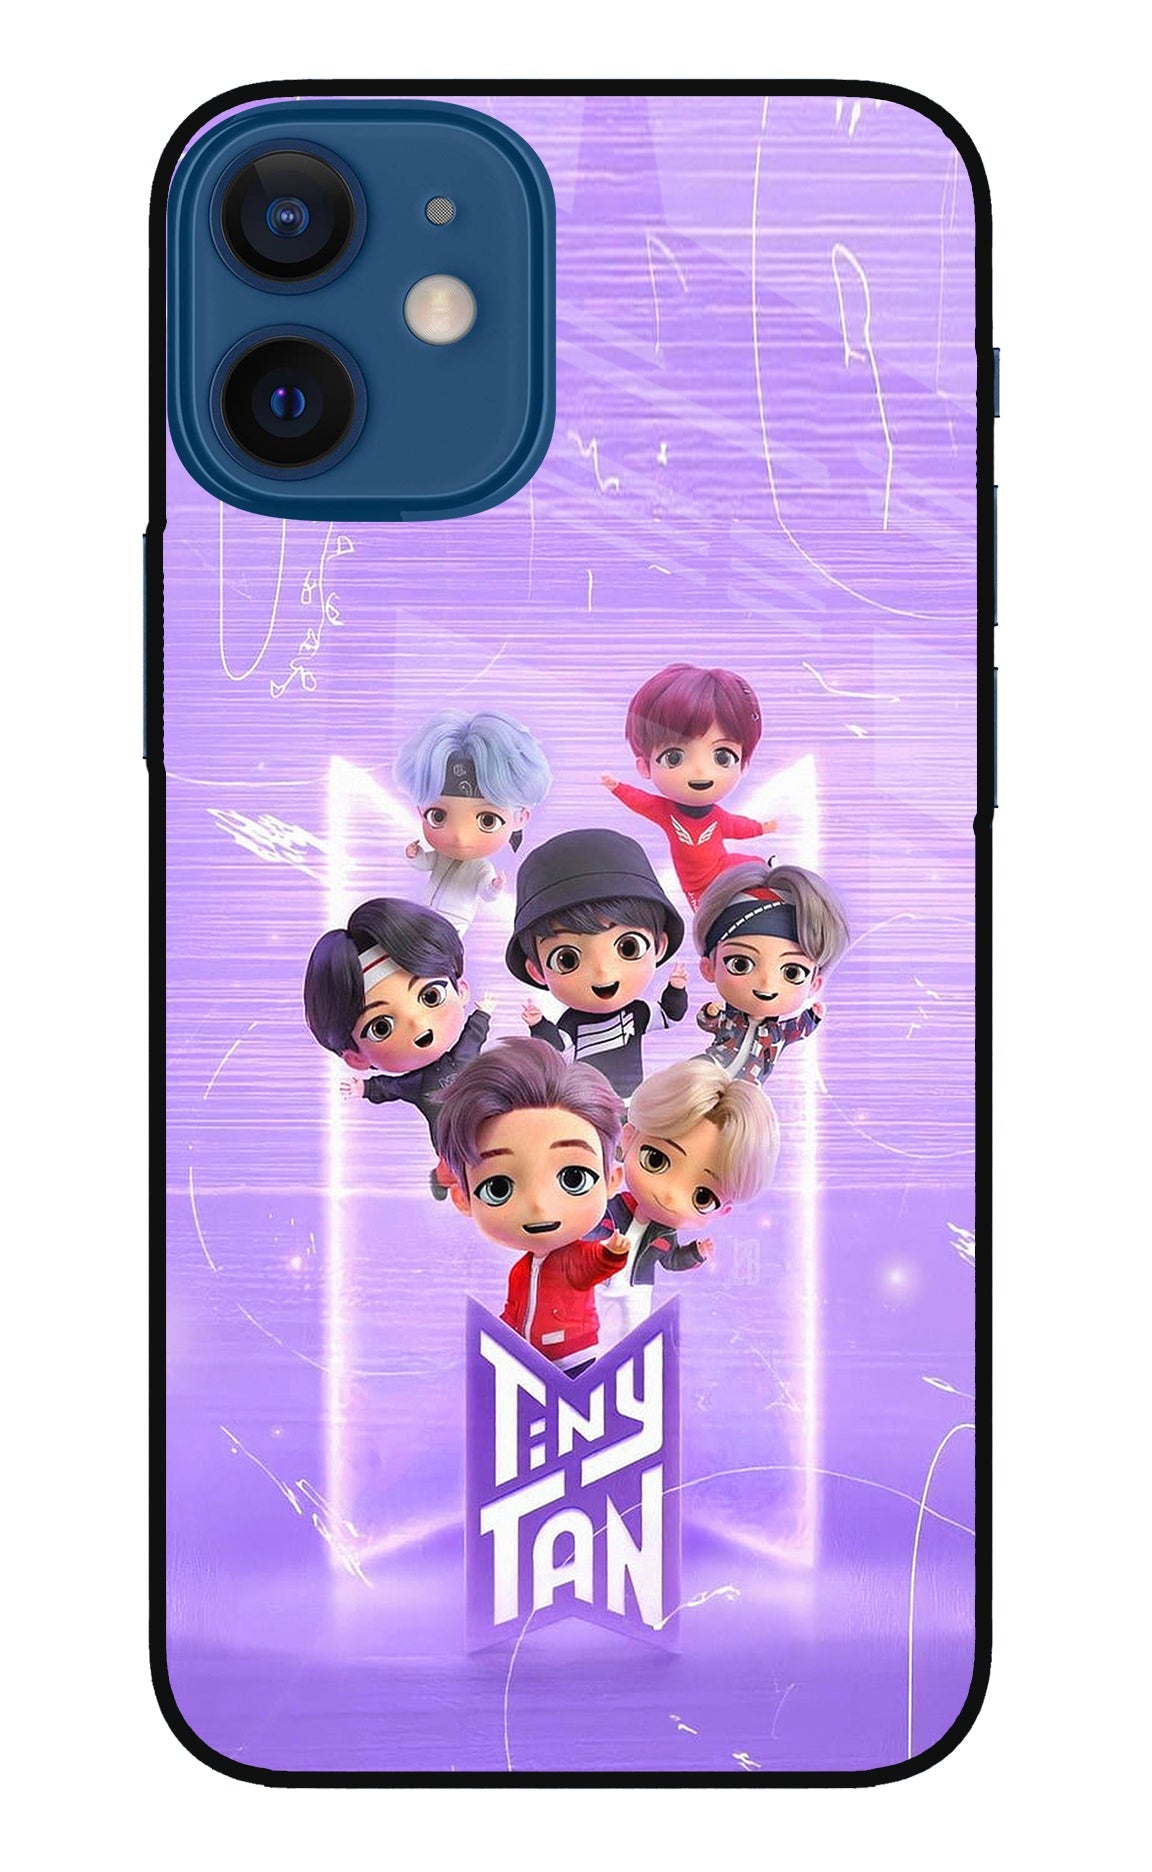 BTS Tiny Tan iPhone 12 Mini Glass Case